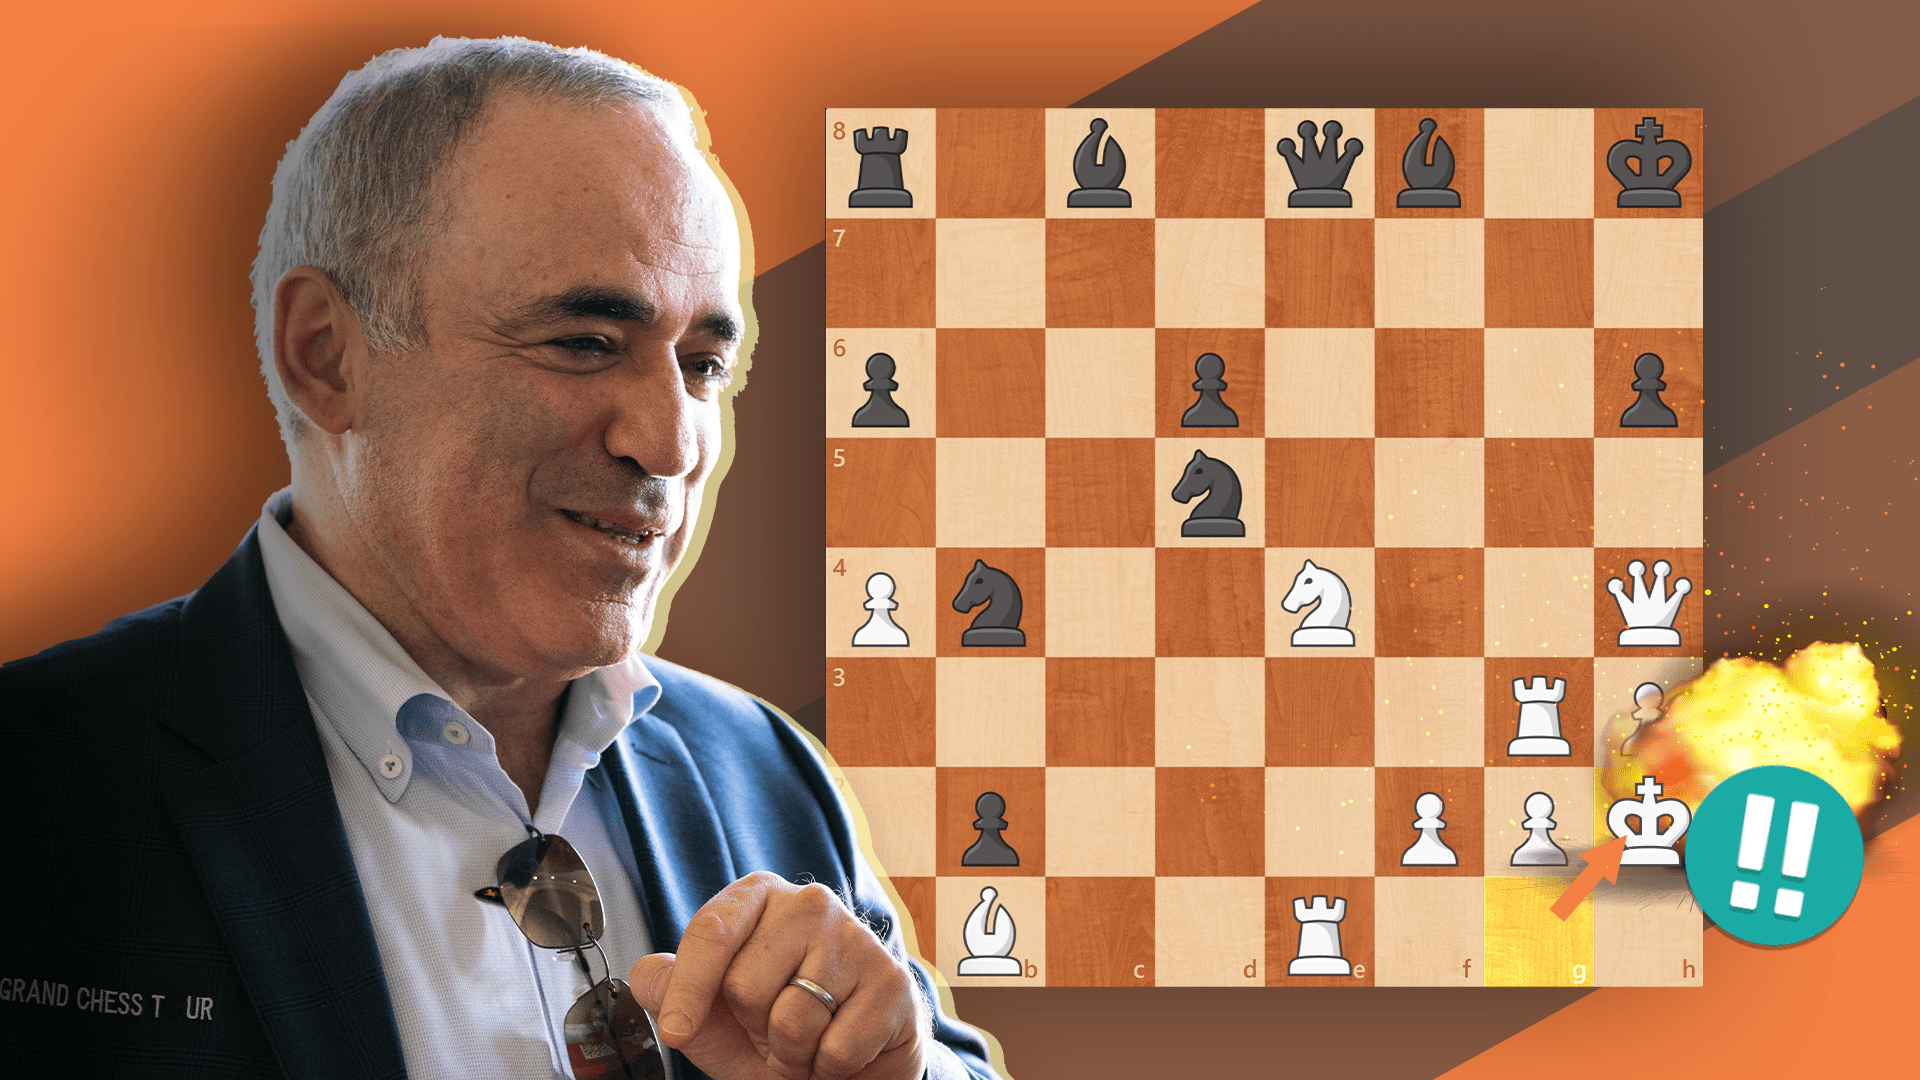 Anatoly Karpov's 5 Most Brilliant Chess Moves 